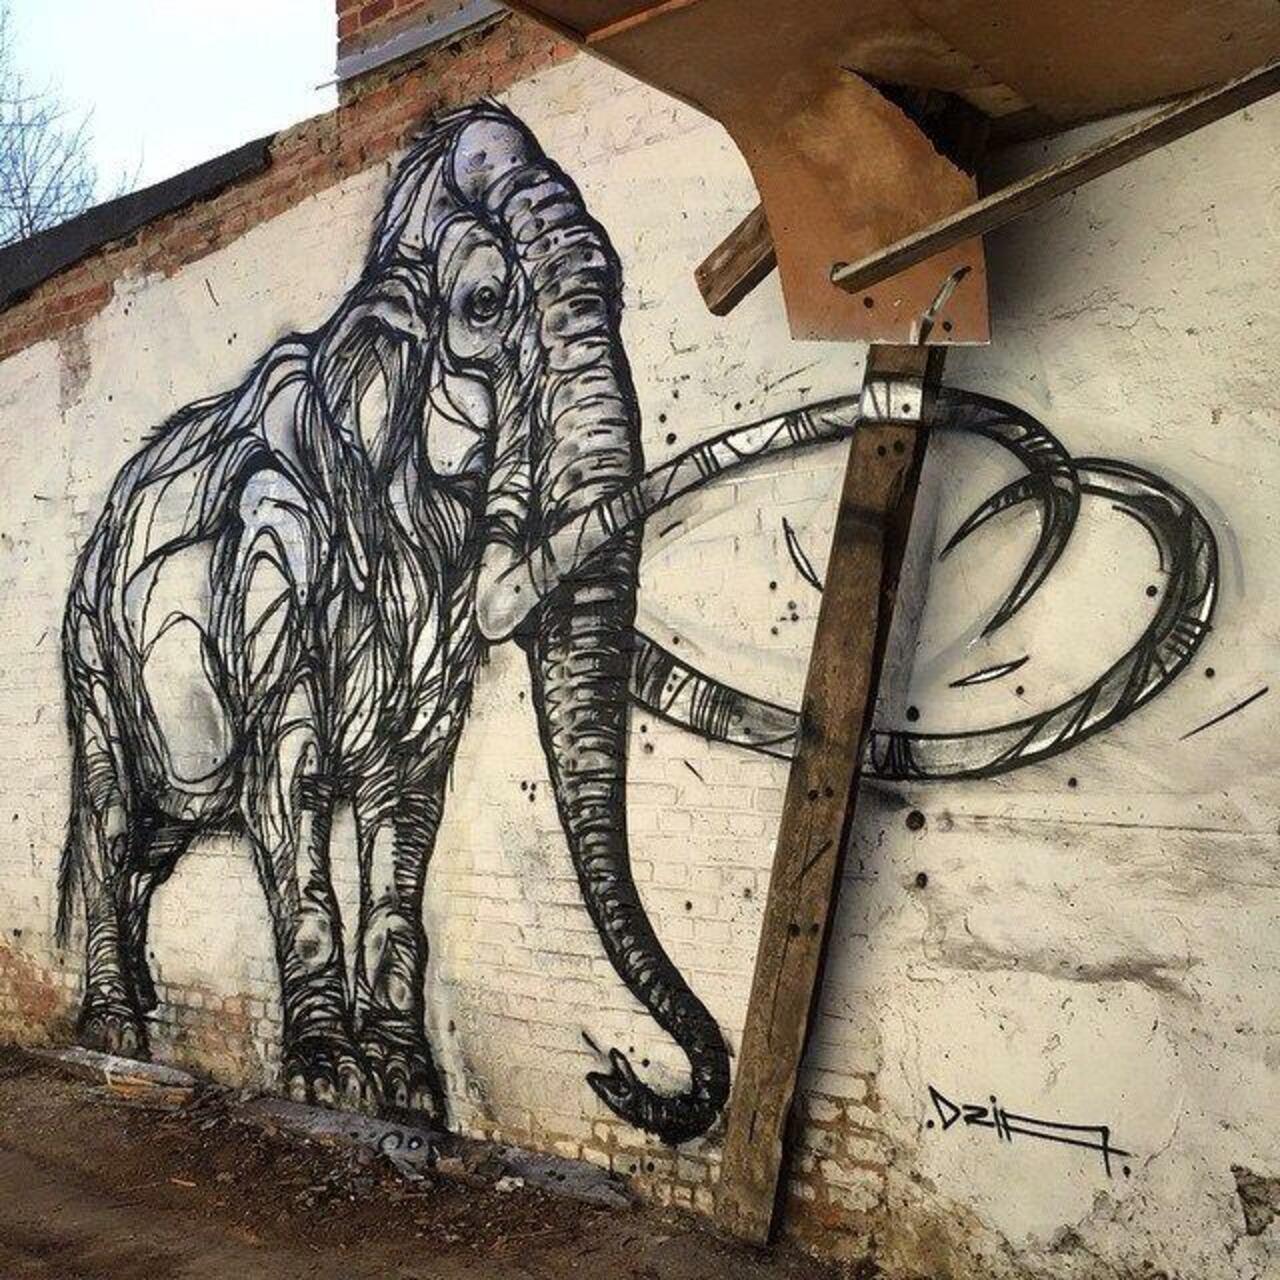 RT GoogleStreetArt "Mammoth. New nature in Street Art wall by DZIA 

#art #graffiti #mural #streetart http://t.co/SVmTZg3rEg"